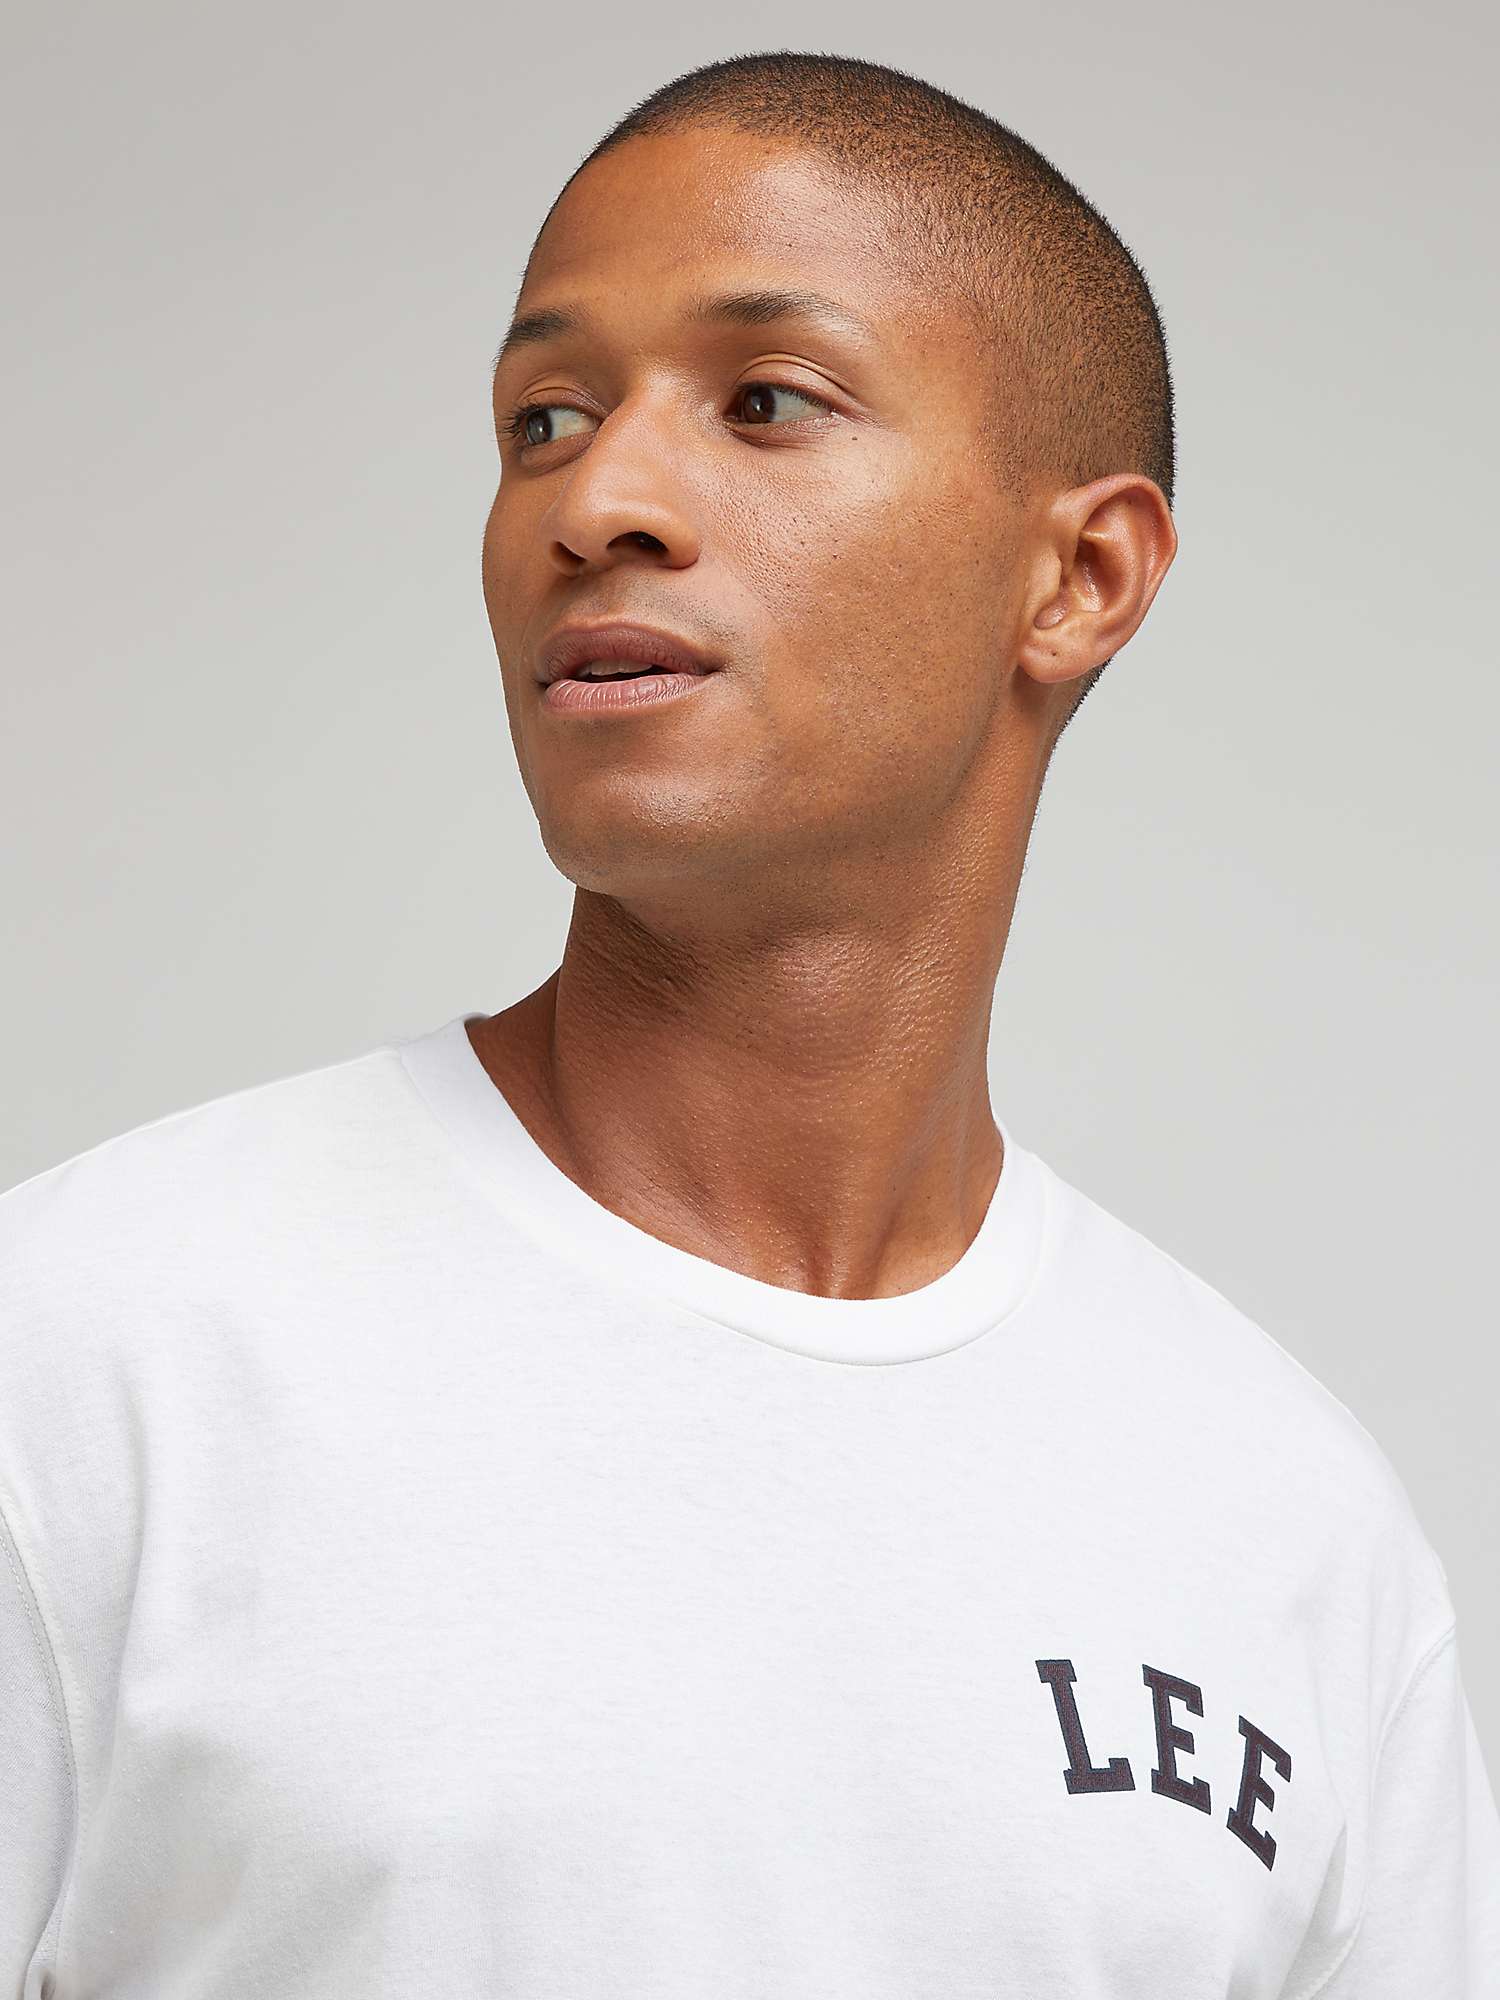 Buy Lee Logo Short Sleeve T-Shirt, Ecru Online at johnlewis.com